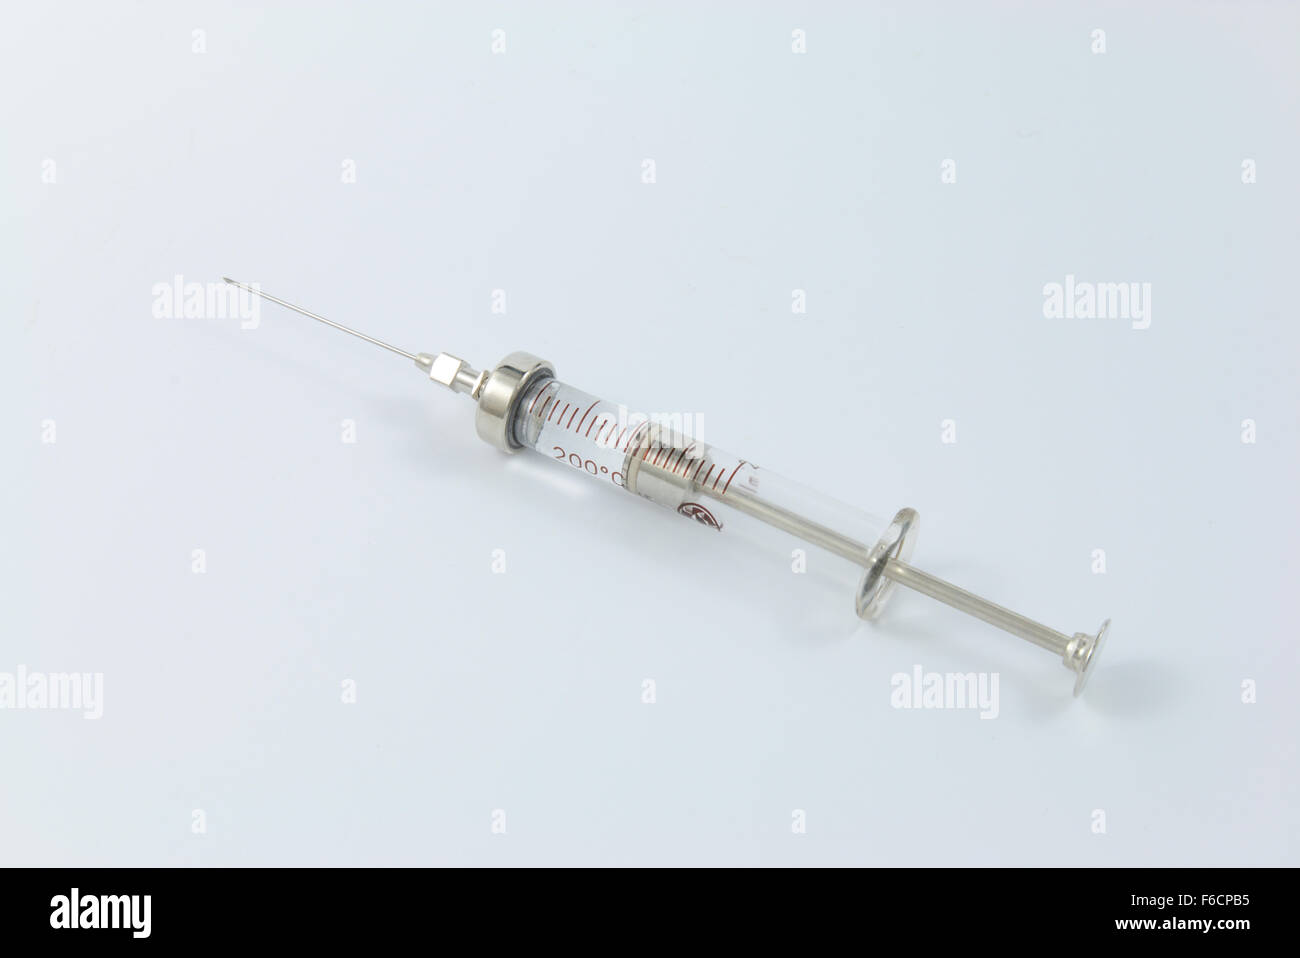 An old type syringe with needle Stock Photo